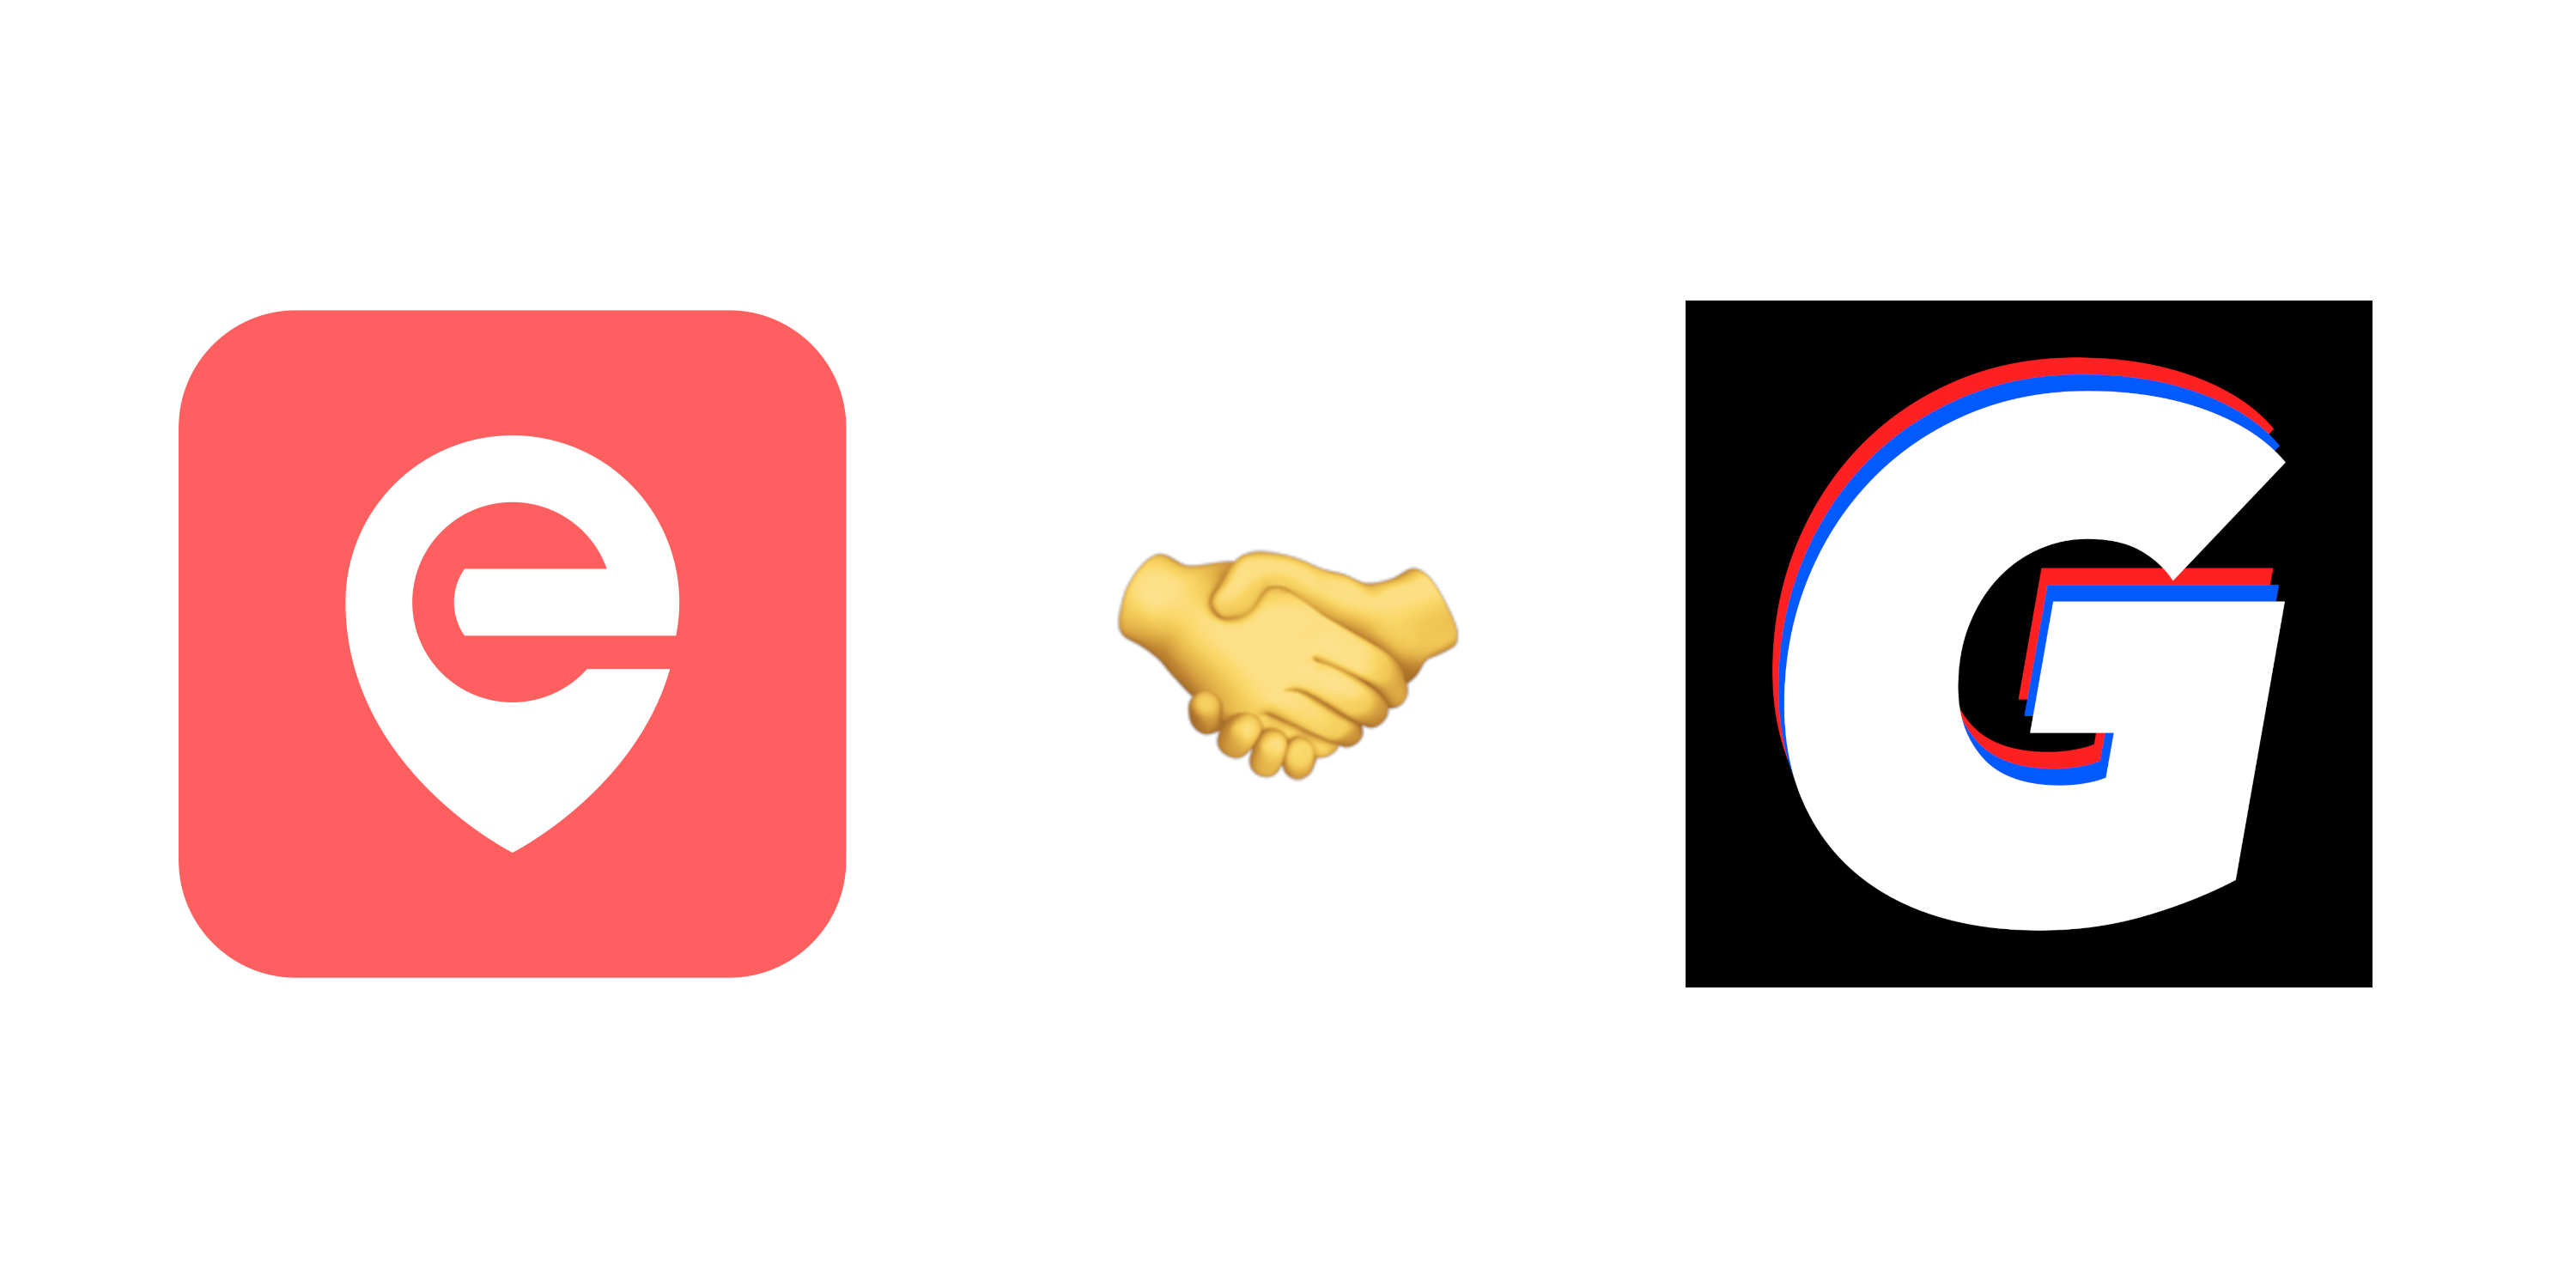 The logos of eddress and Gorillas, with the handshake emoji in between.